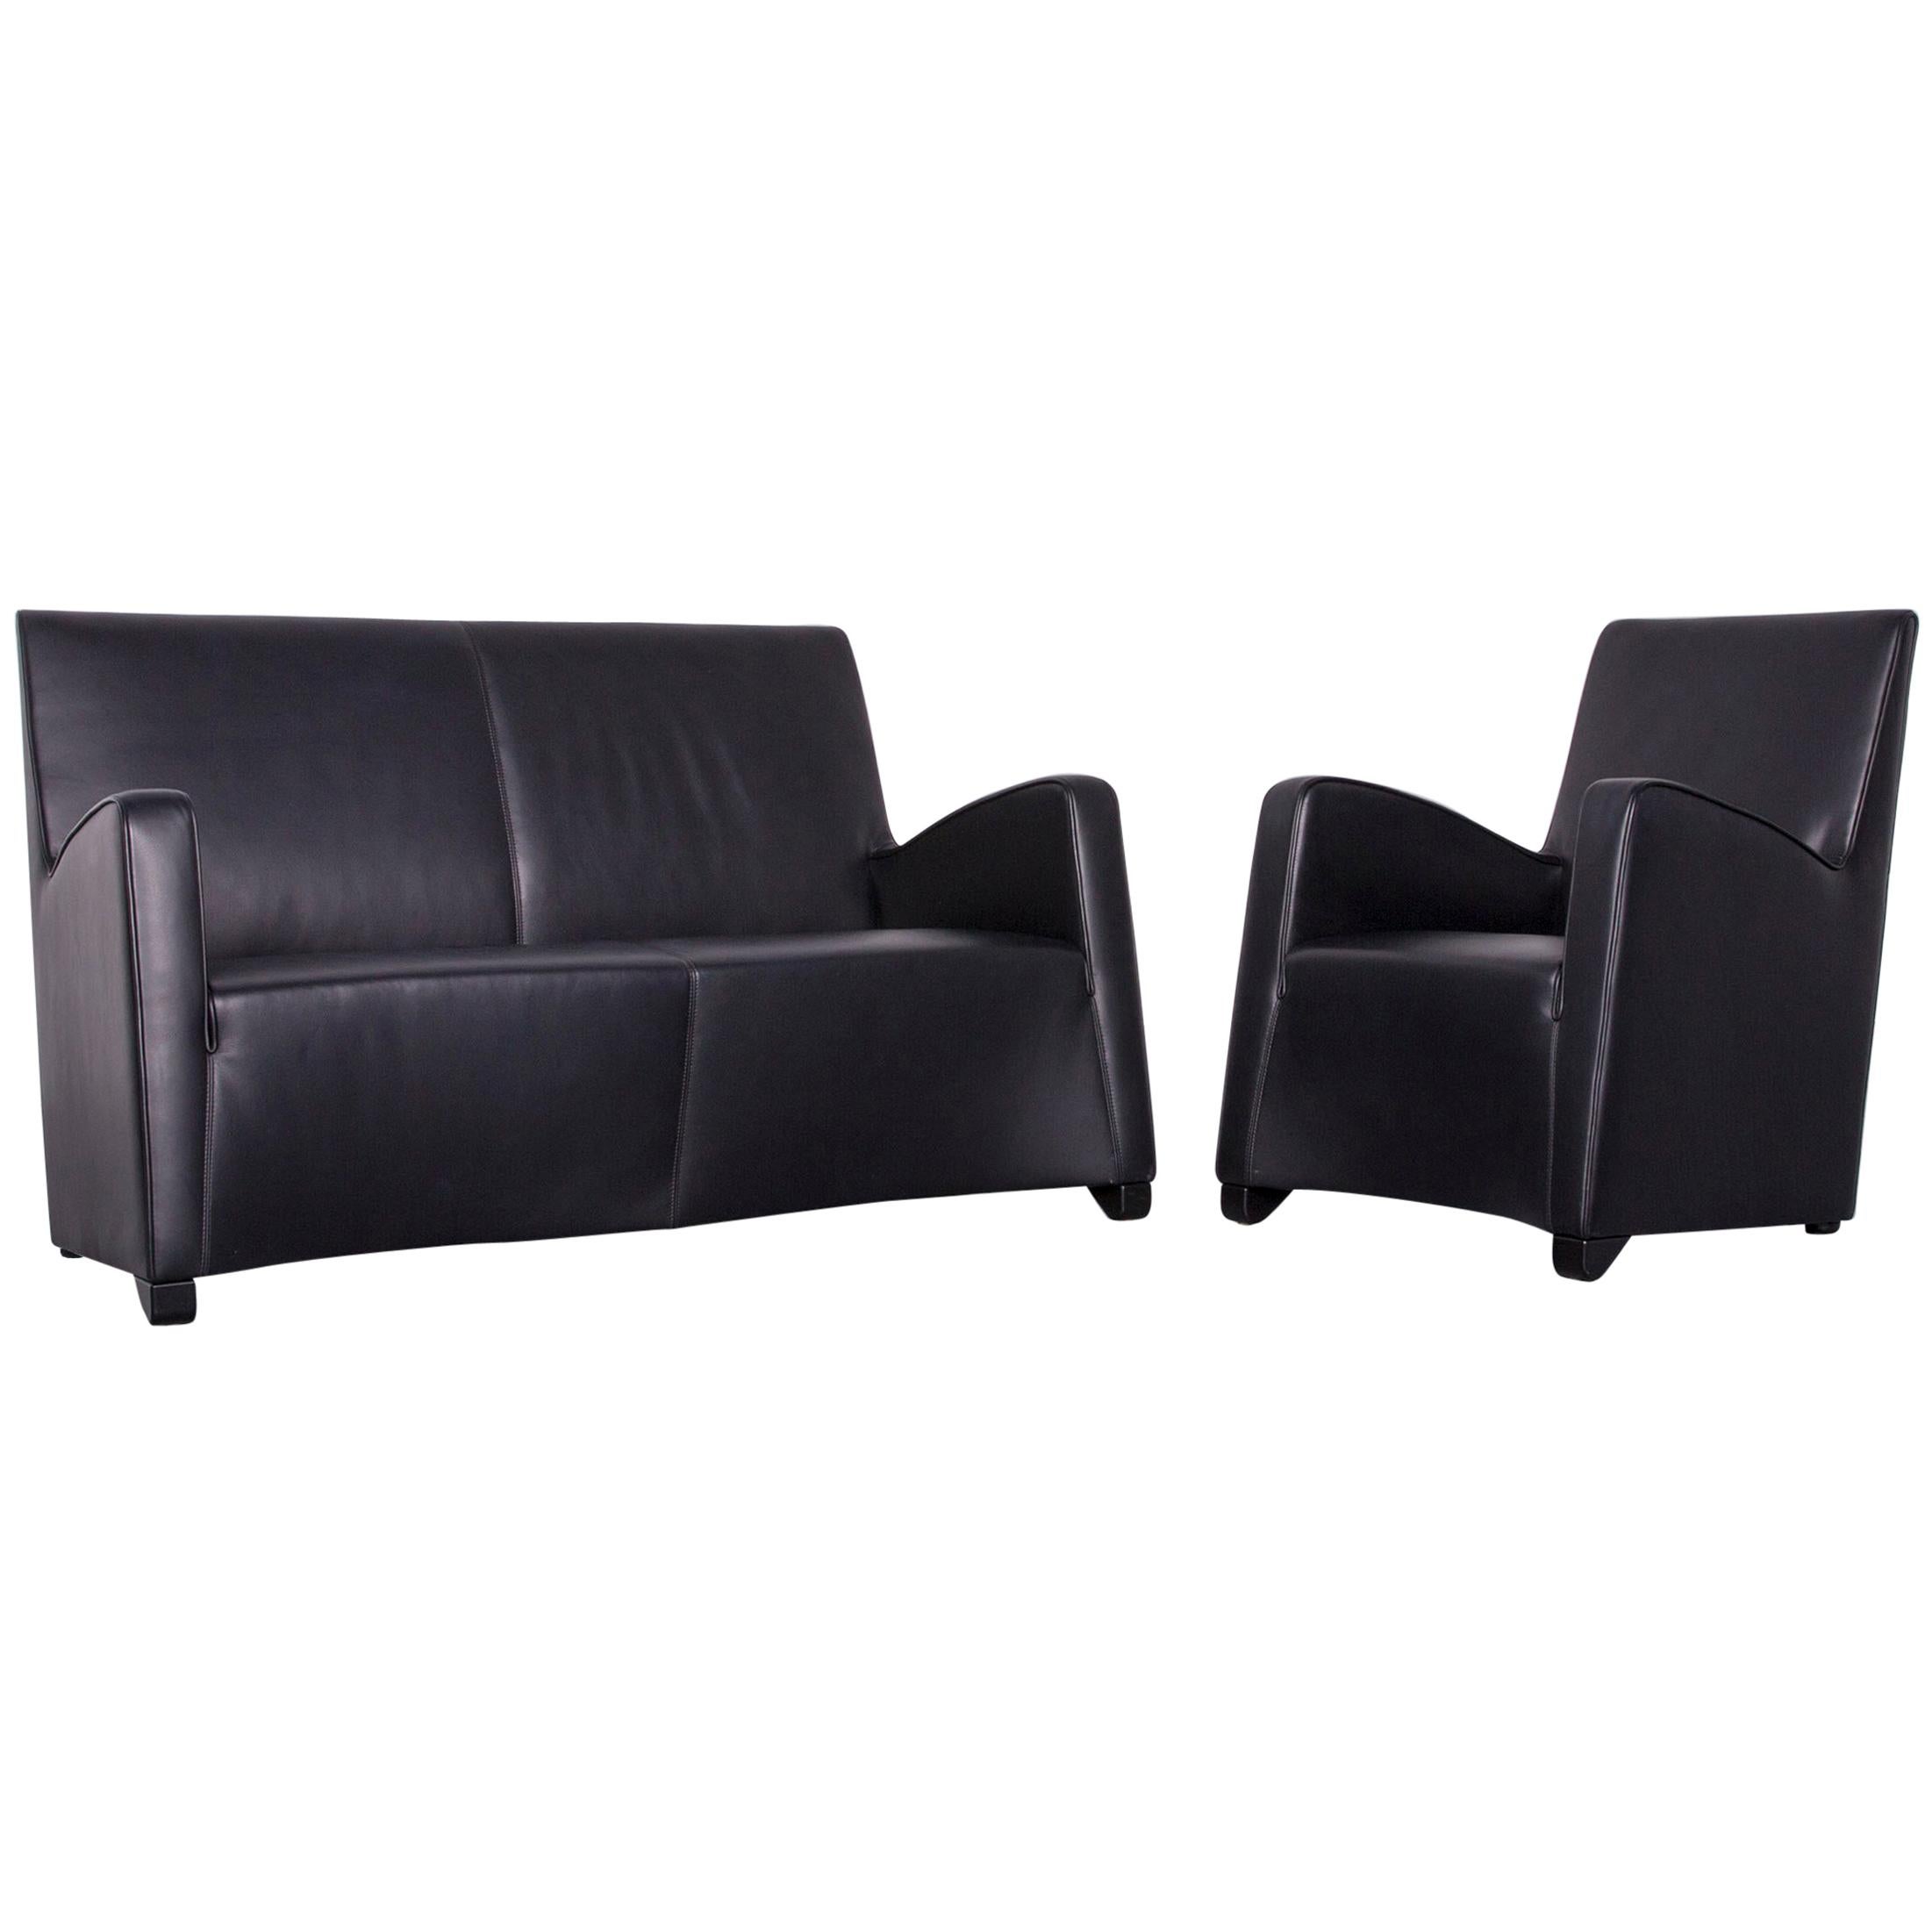 Wittmann Duke Designer Leather Sofa Armchair Set Black Two-Seat Couch